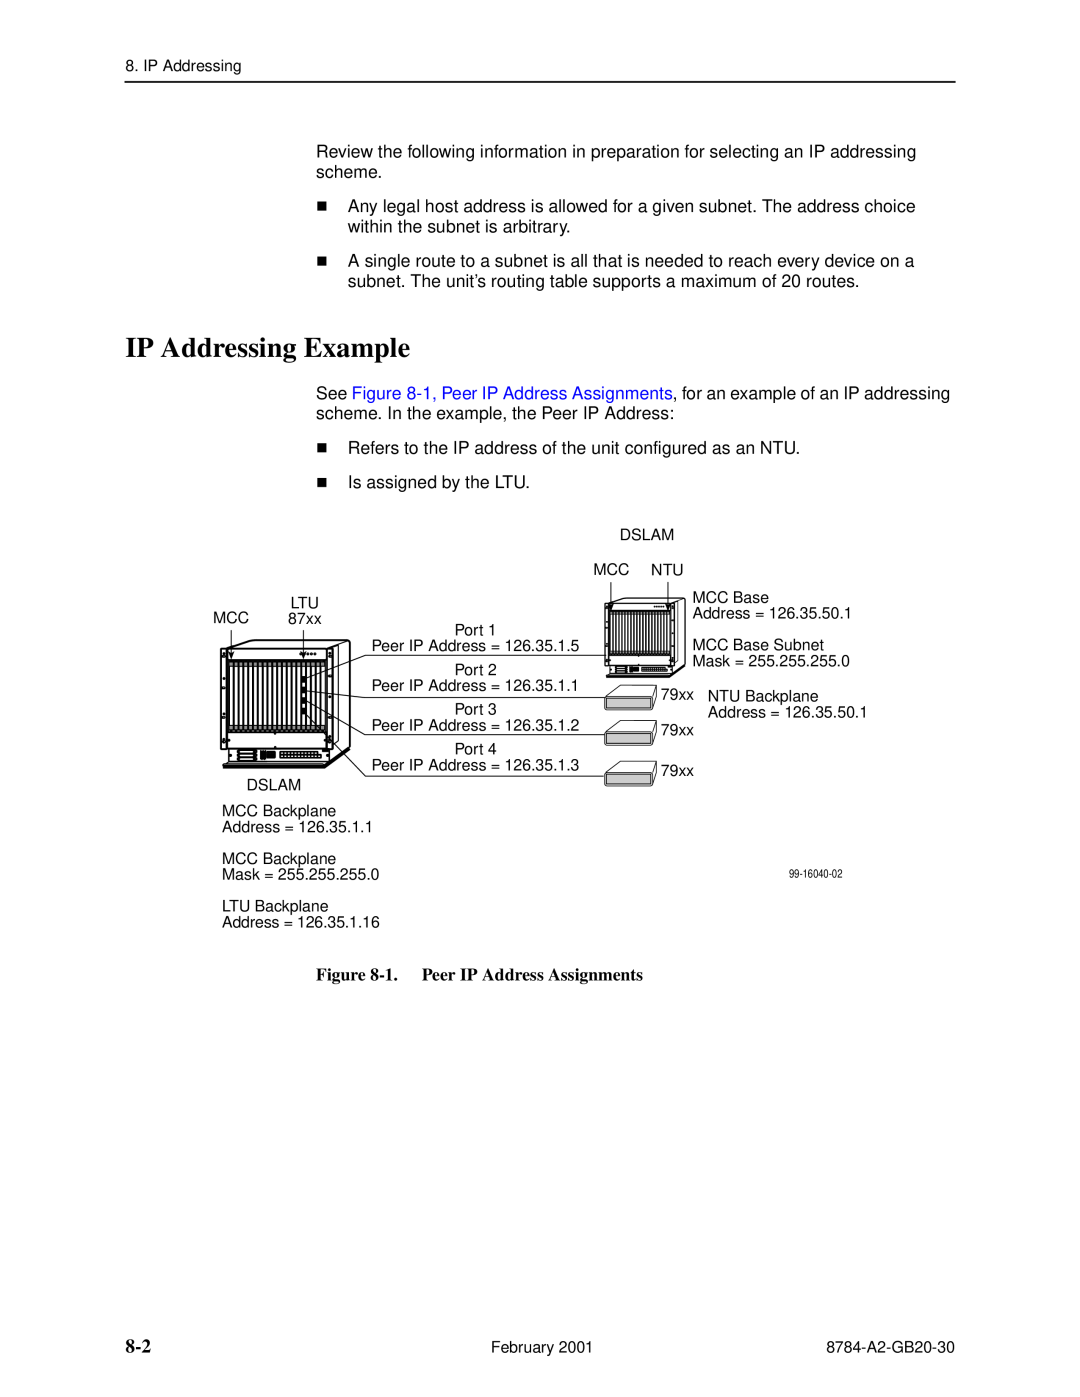 Paradyne 8784 manual IP Addressing Example, 1. Peer IP Address Assignments 